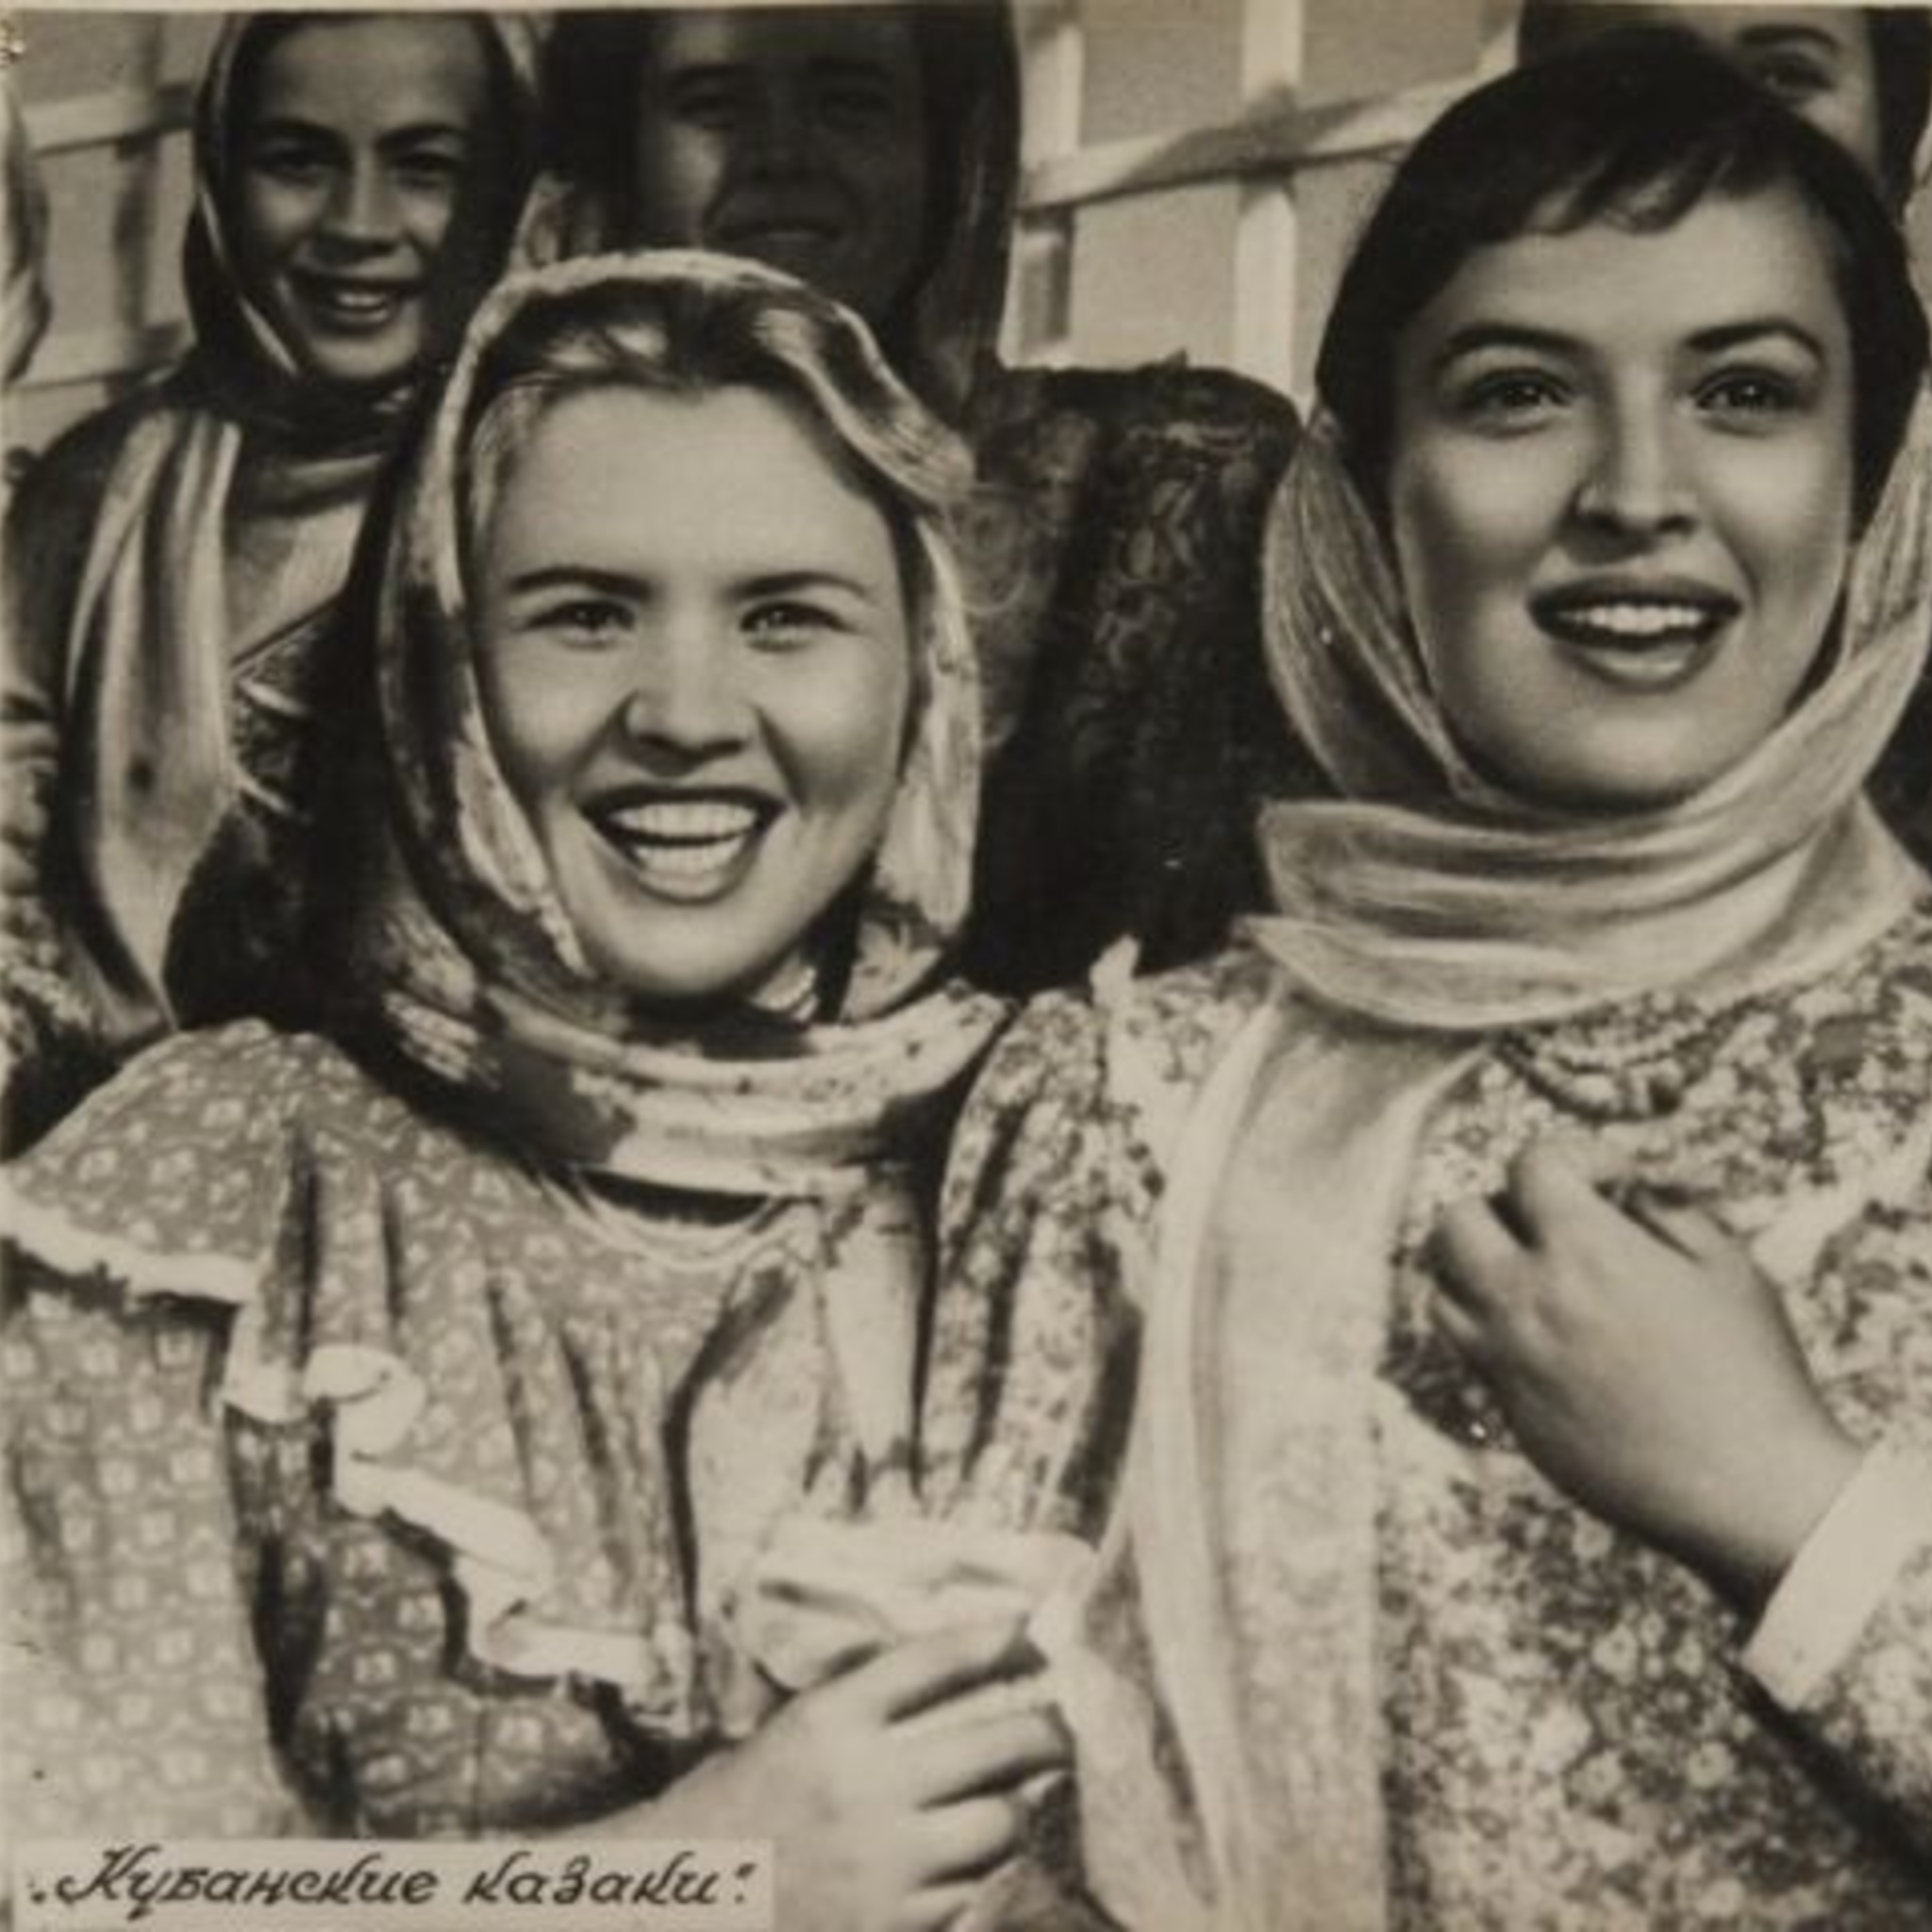 The exhibition Freeze: Soviet films promotional photos